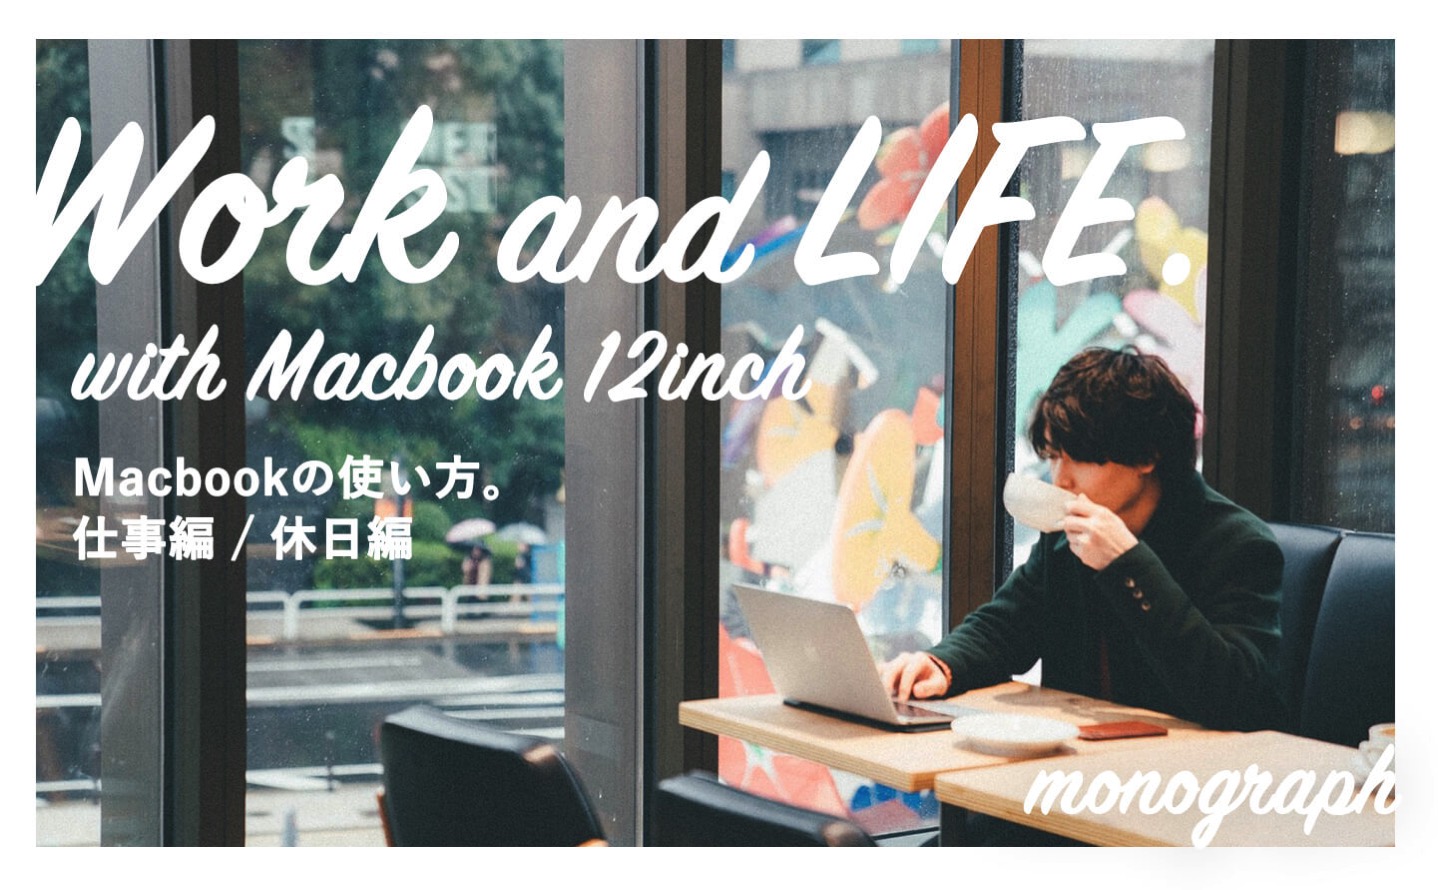 Macbook use